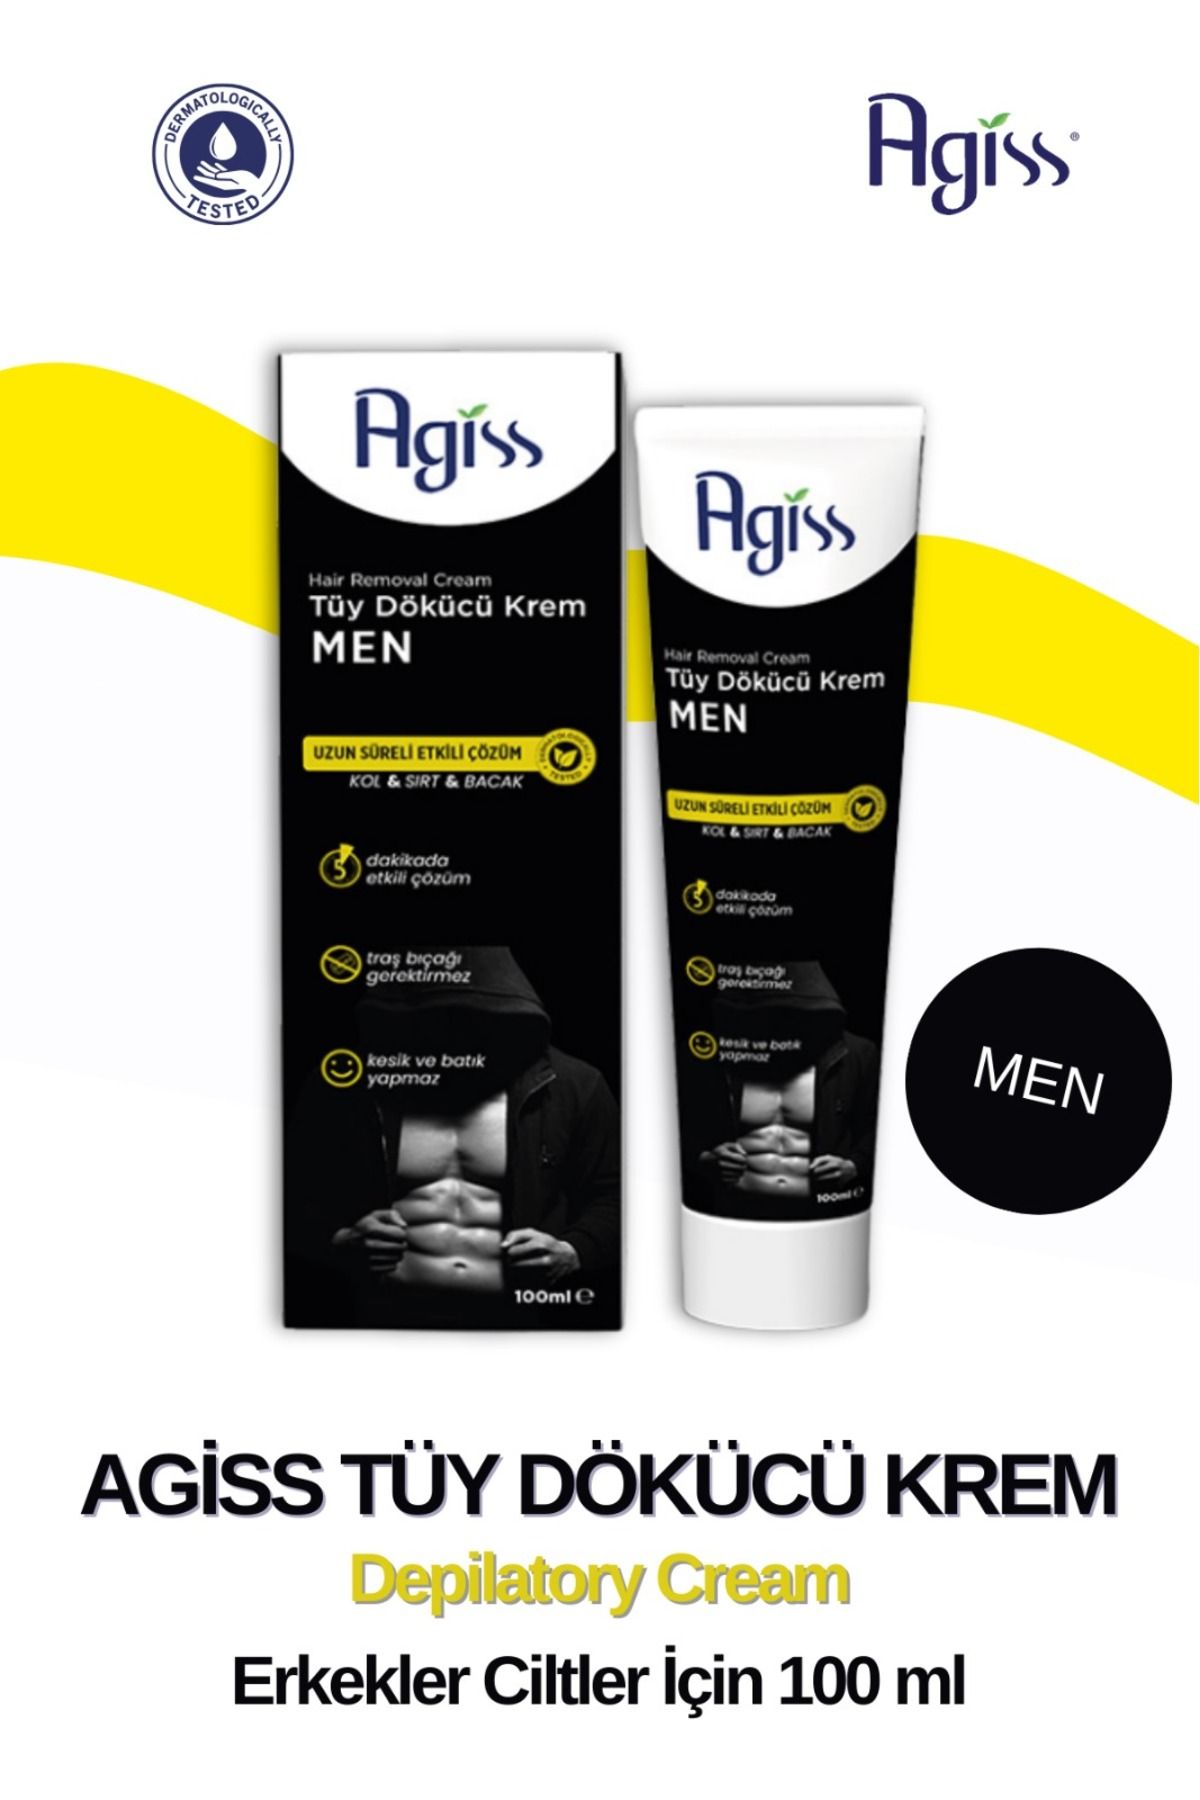 AGISS Tüy Dökücü Krem 100 ml For Men